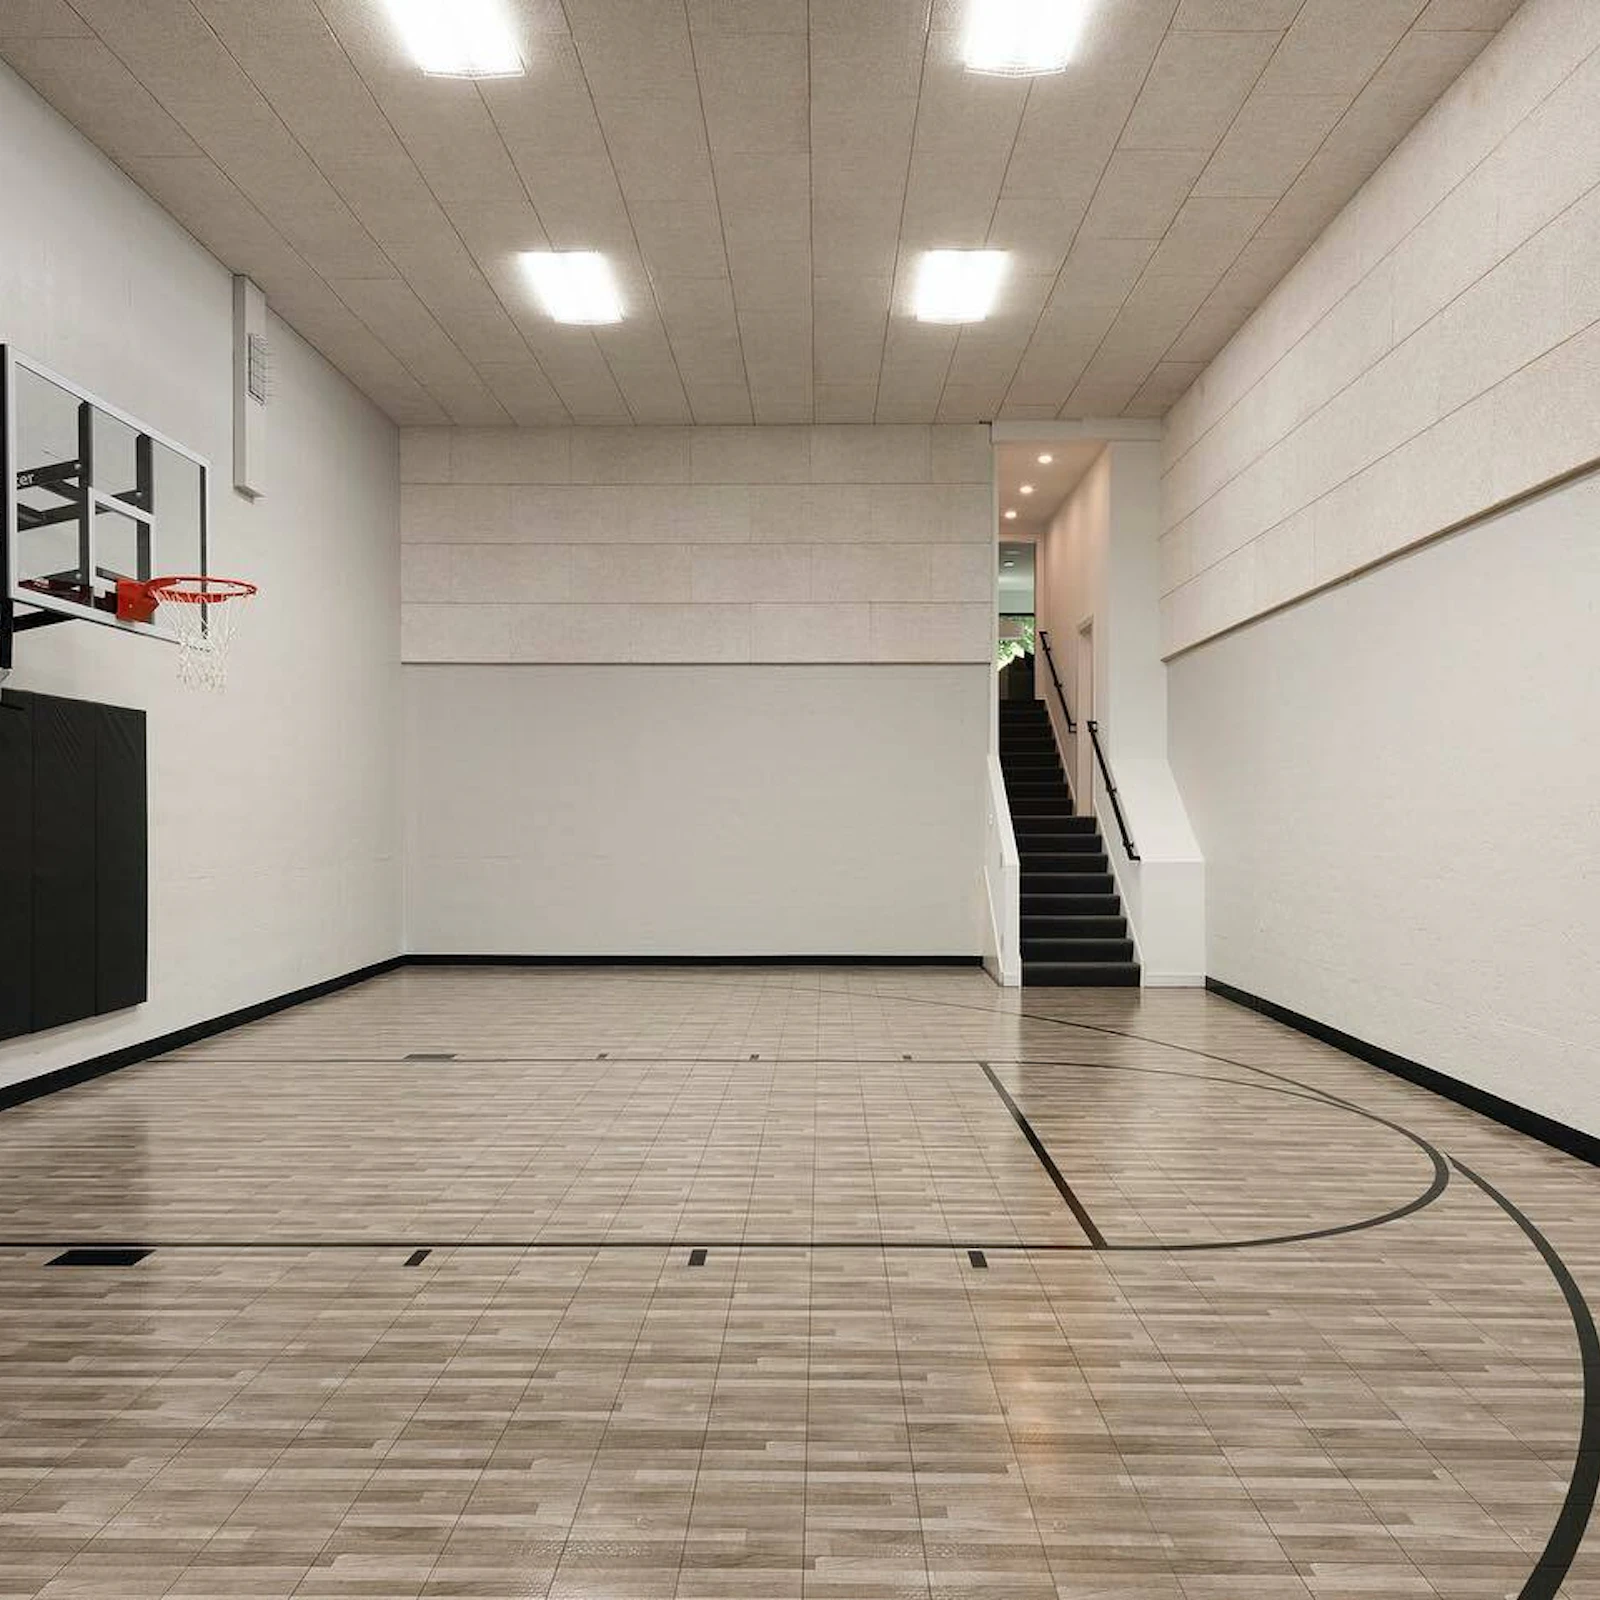 Custom basketball court